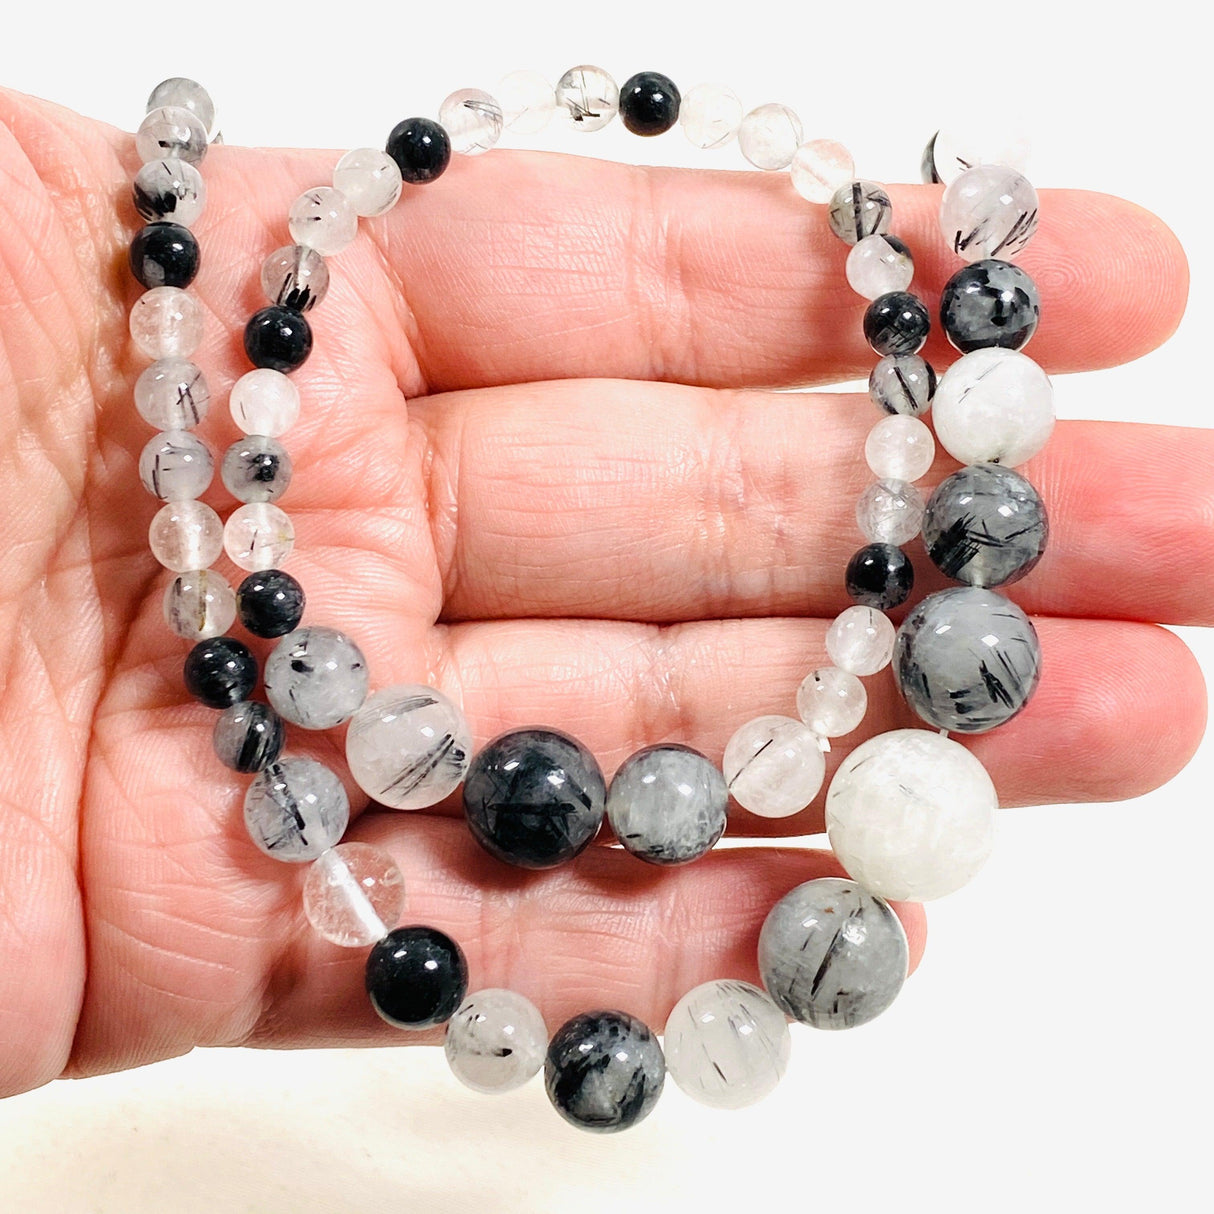 Natural Gemstone Graduated Beads Necklace and Bracelet Set - Nature's Magick